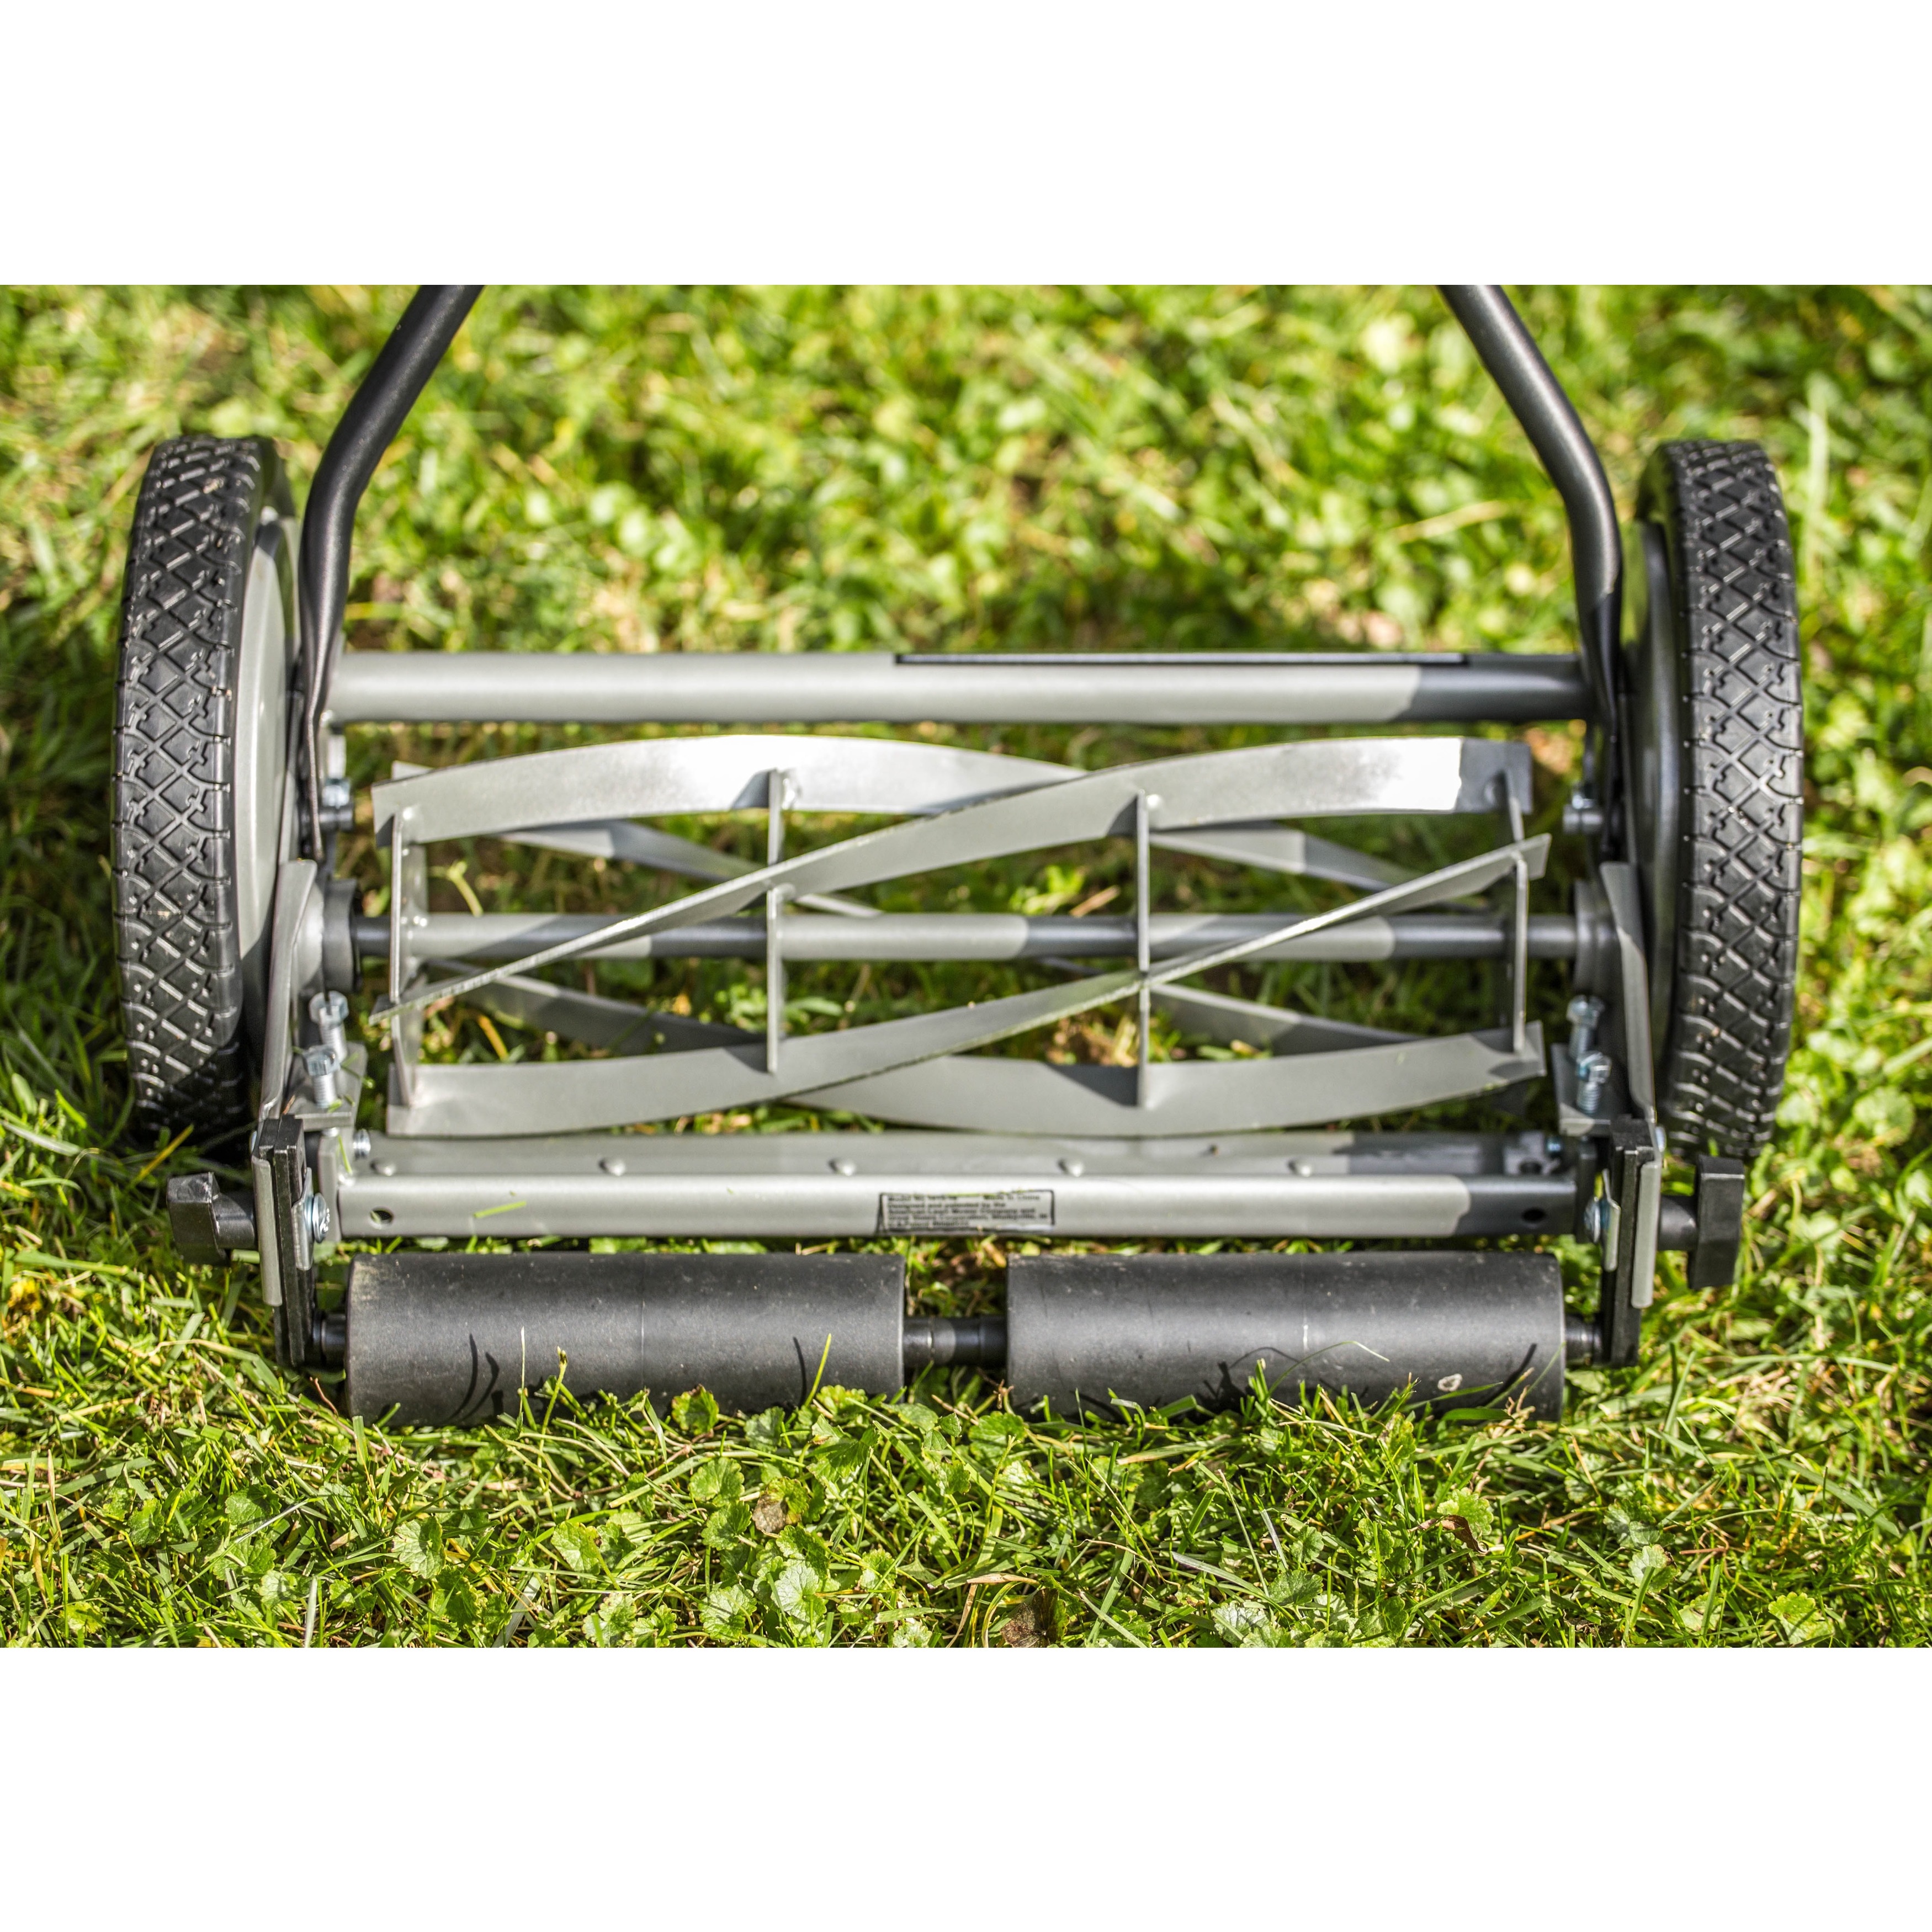 American Lawn Mower 1815-18 18-inch 5-Blade Push Reel Lawn Mower